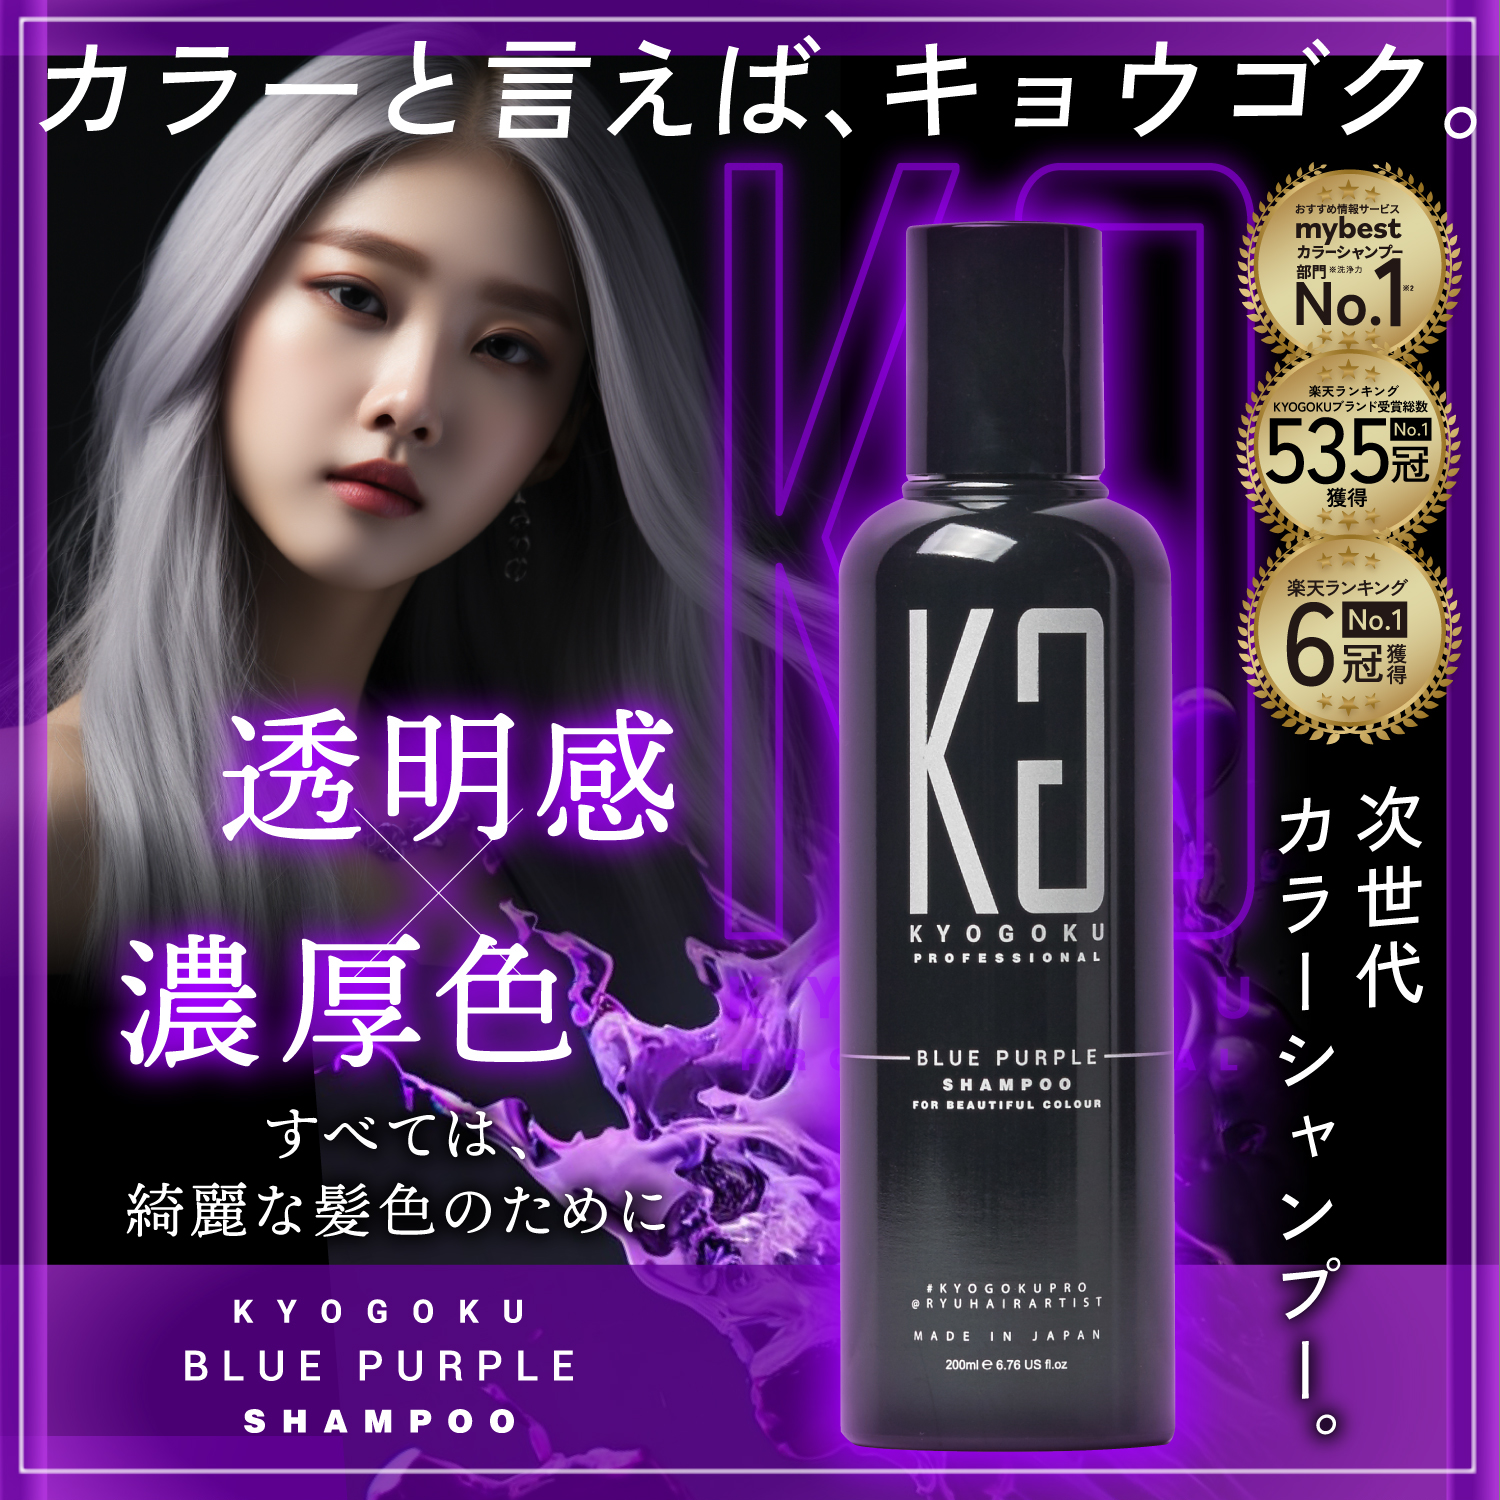 Kyogoku Professional / KYOGOKU ブルーパープルカラーシャンプー BP ムラシャン 紫シャンプー ムラサキシャンプー